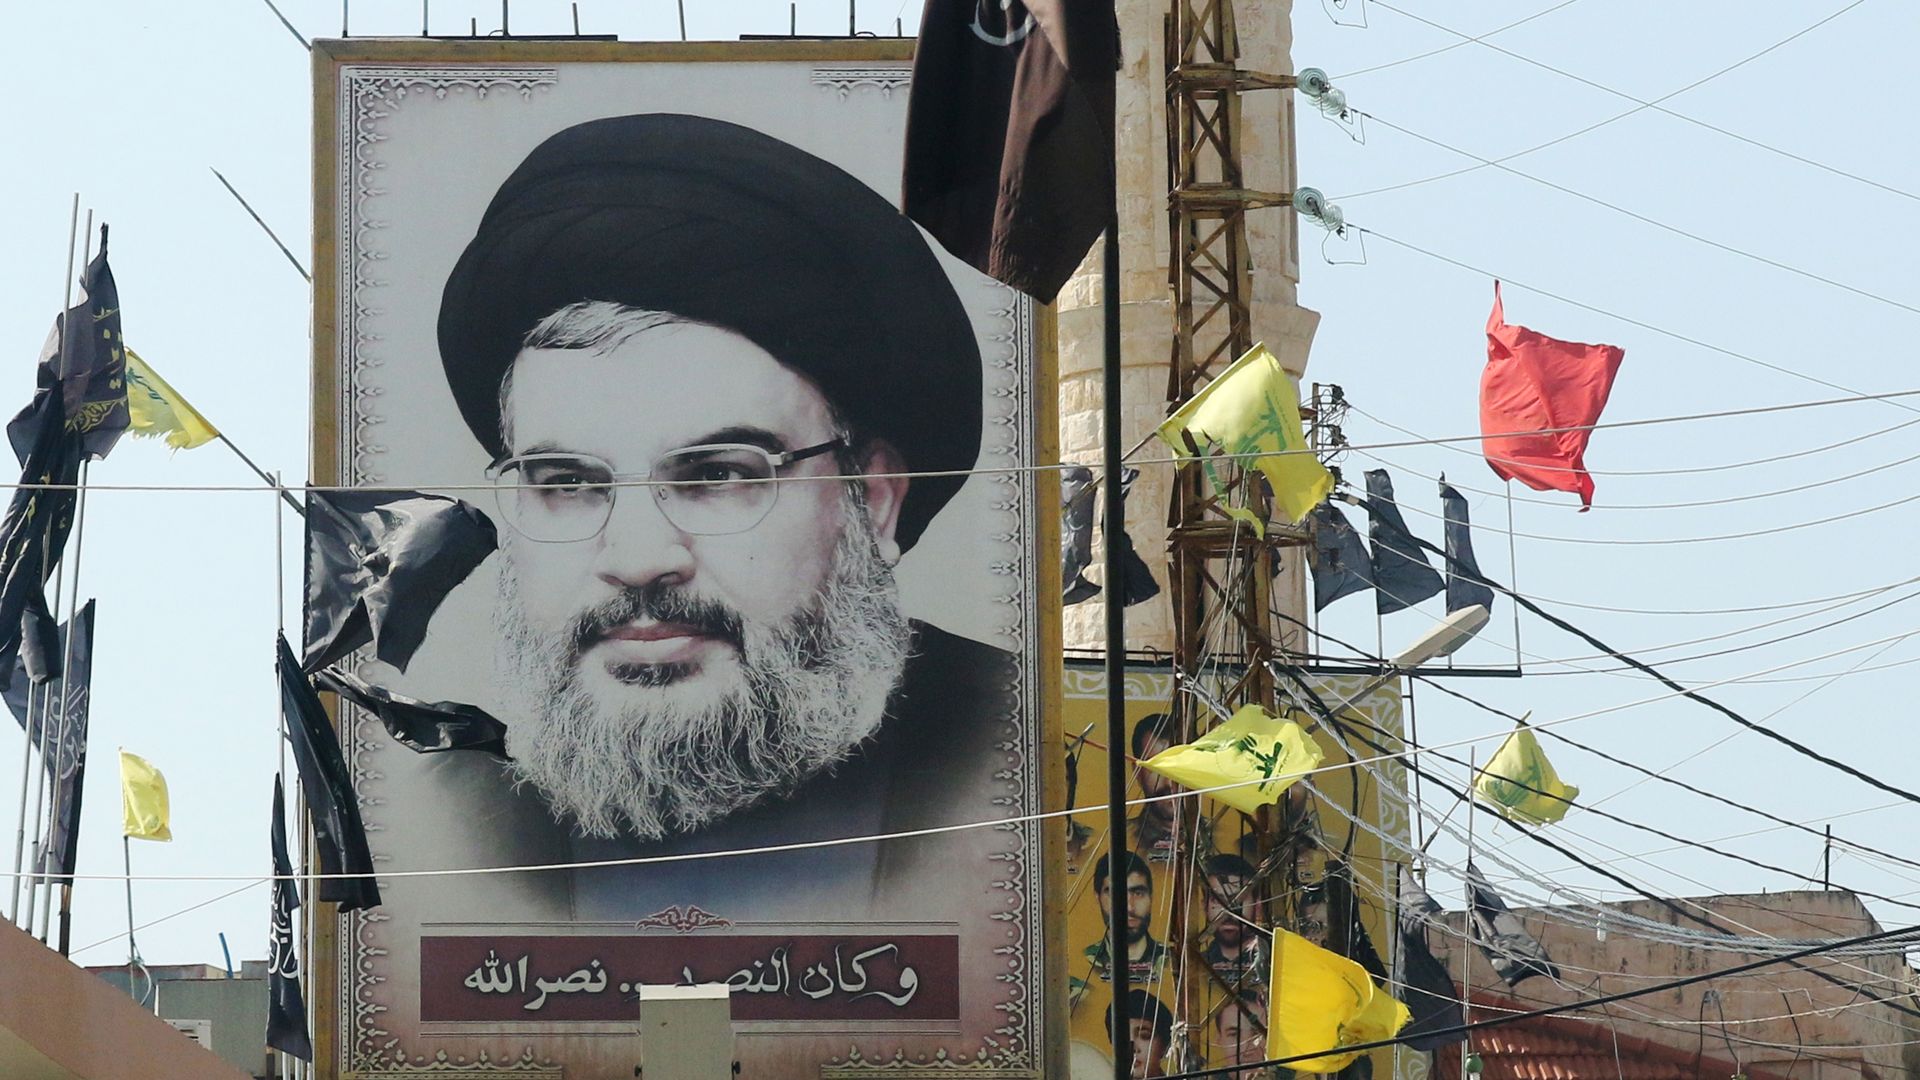 A portrait of the head of the Lebanese Shiite movement Hezbollah, Hasan Nasrallah